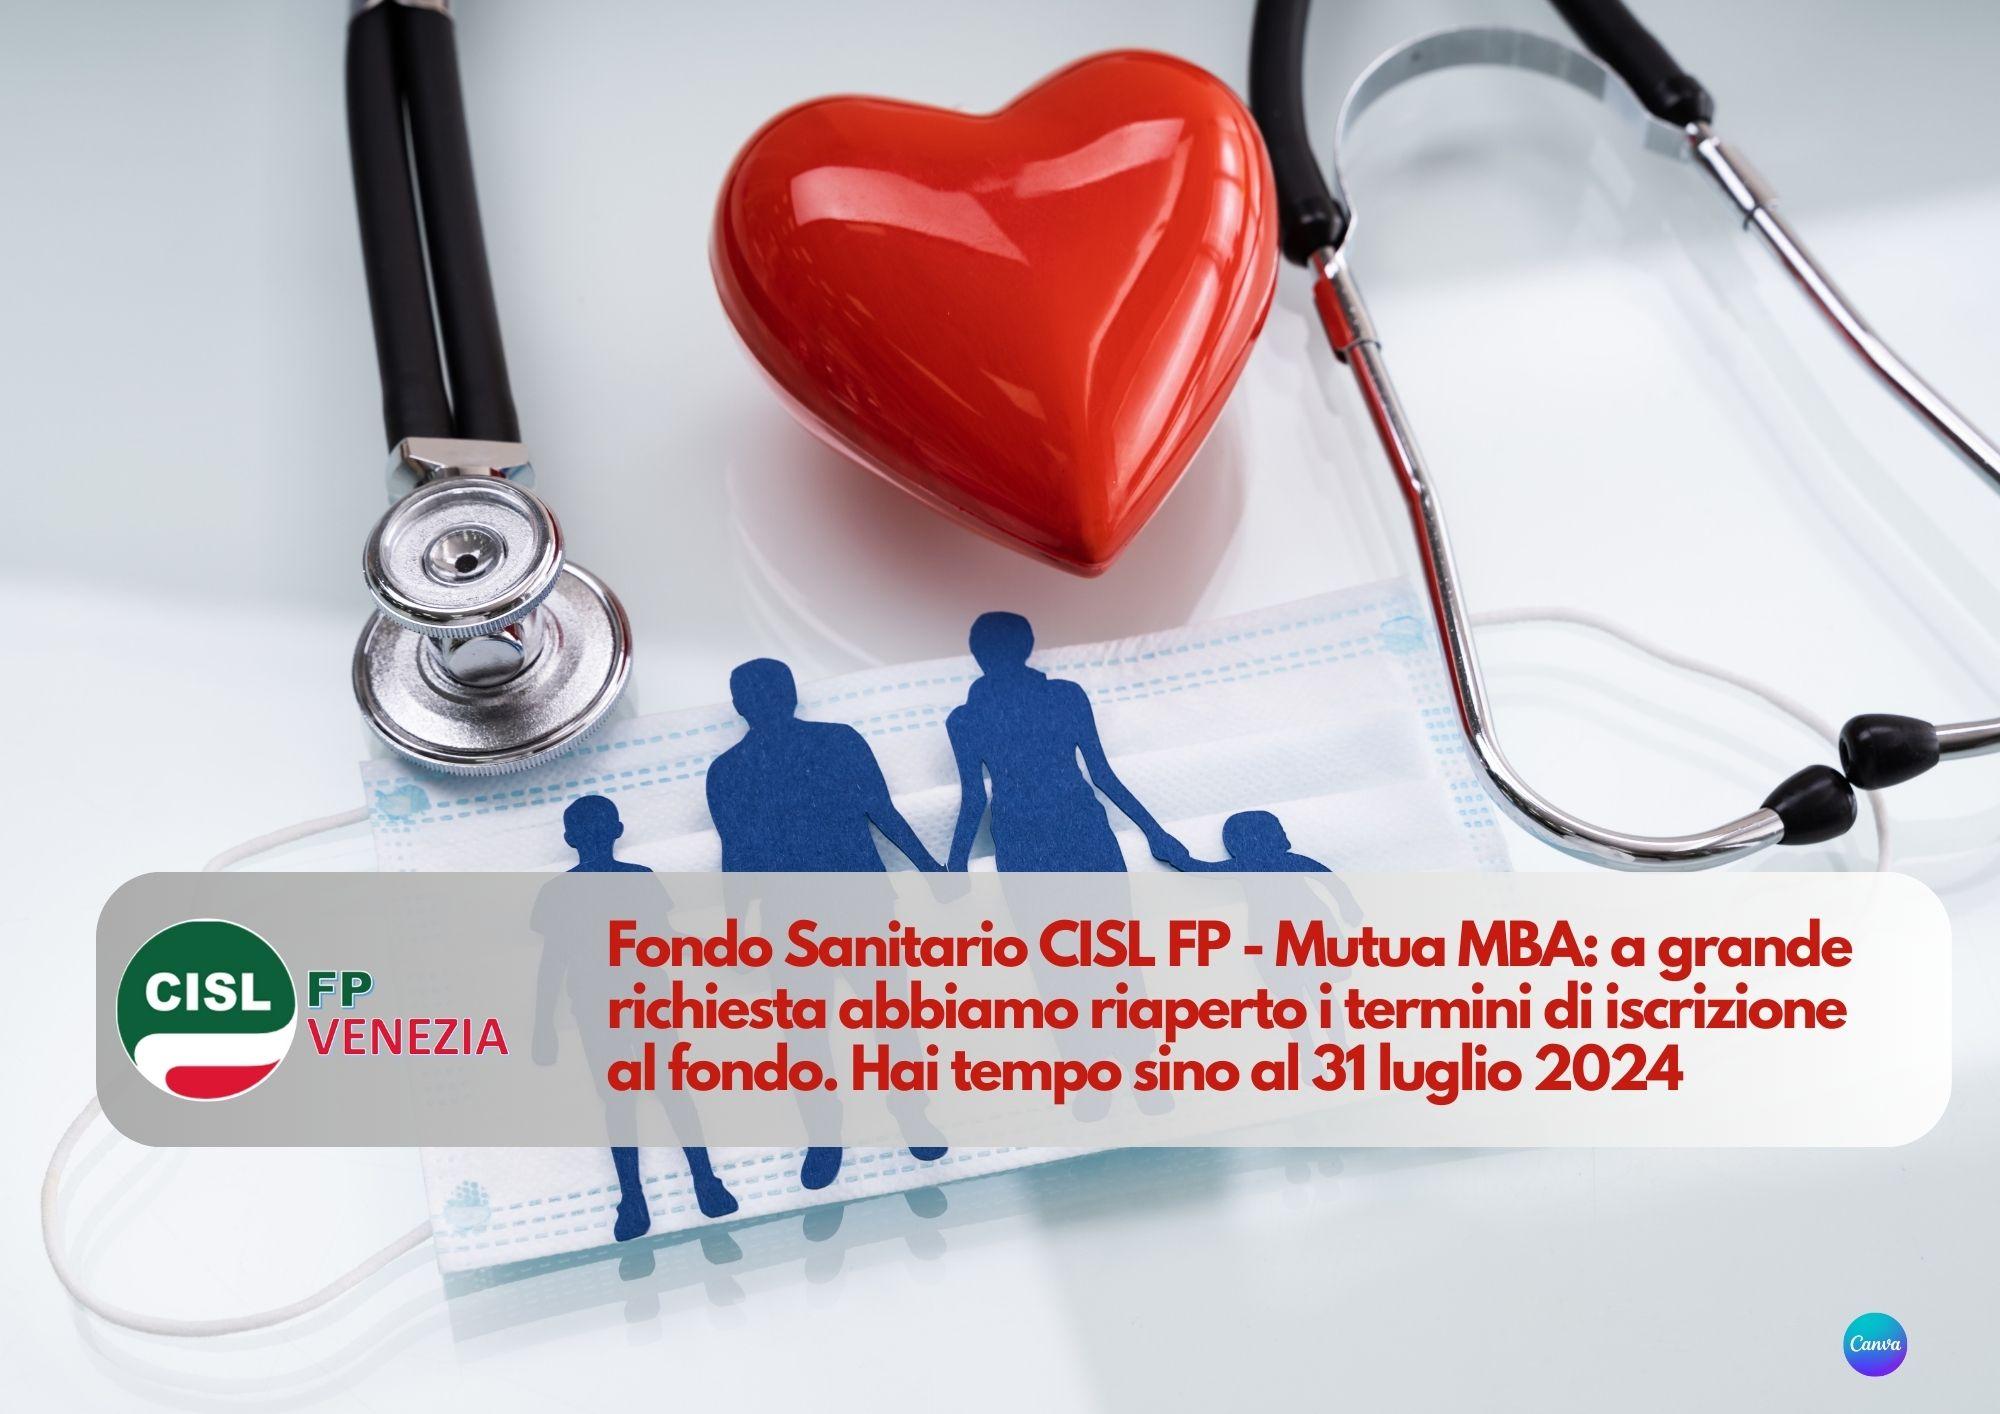 CISL FP Venezia. Fondo Sanitario CISL FP - Mutua MBA: apertura adesione straordinaria